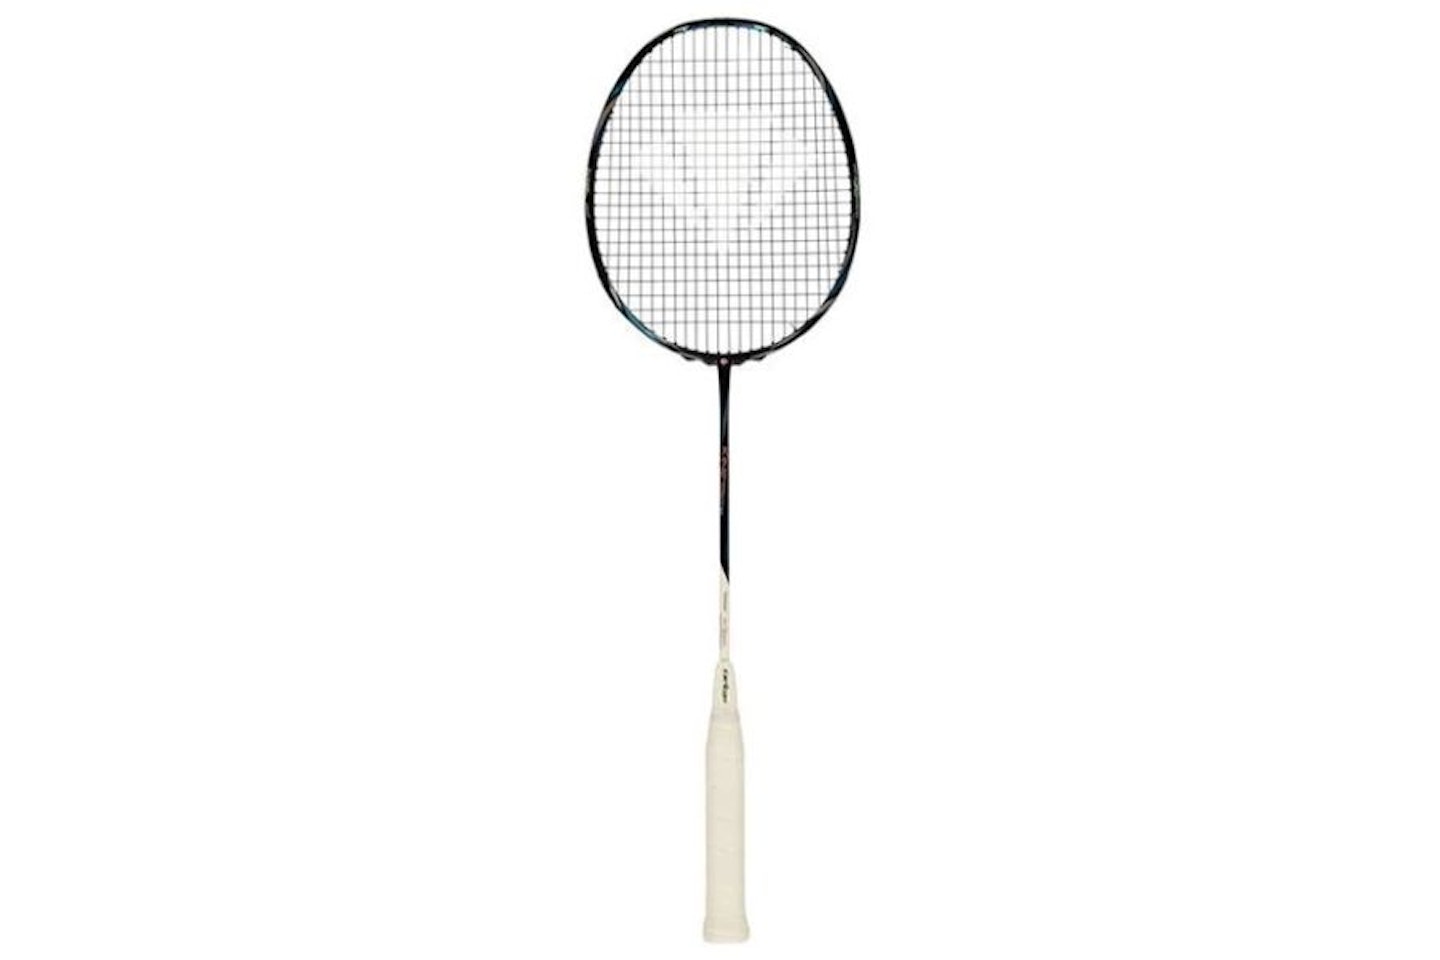 Carlton Kinesis X1 Badminton Racket